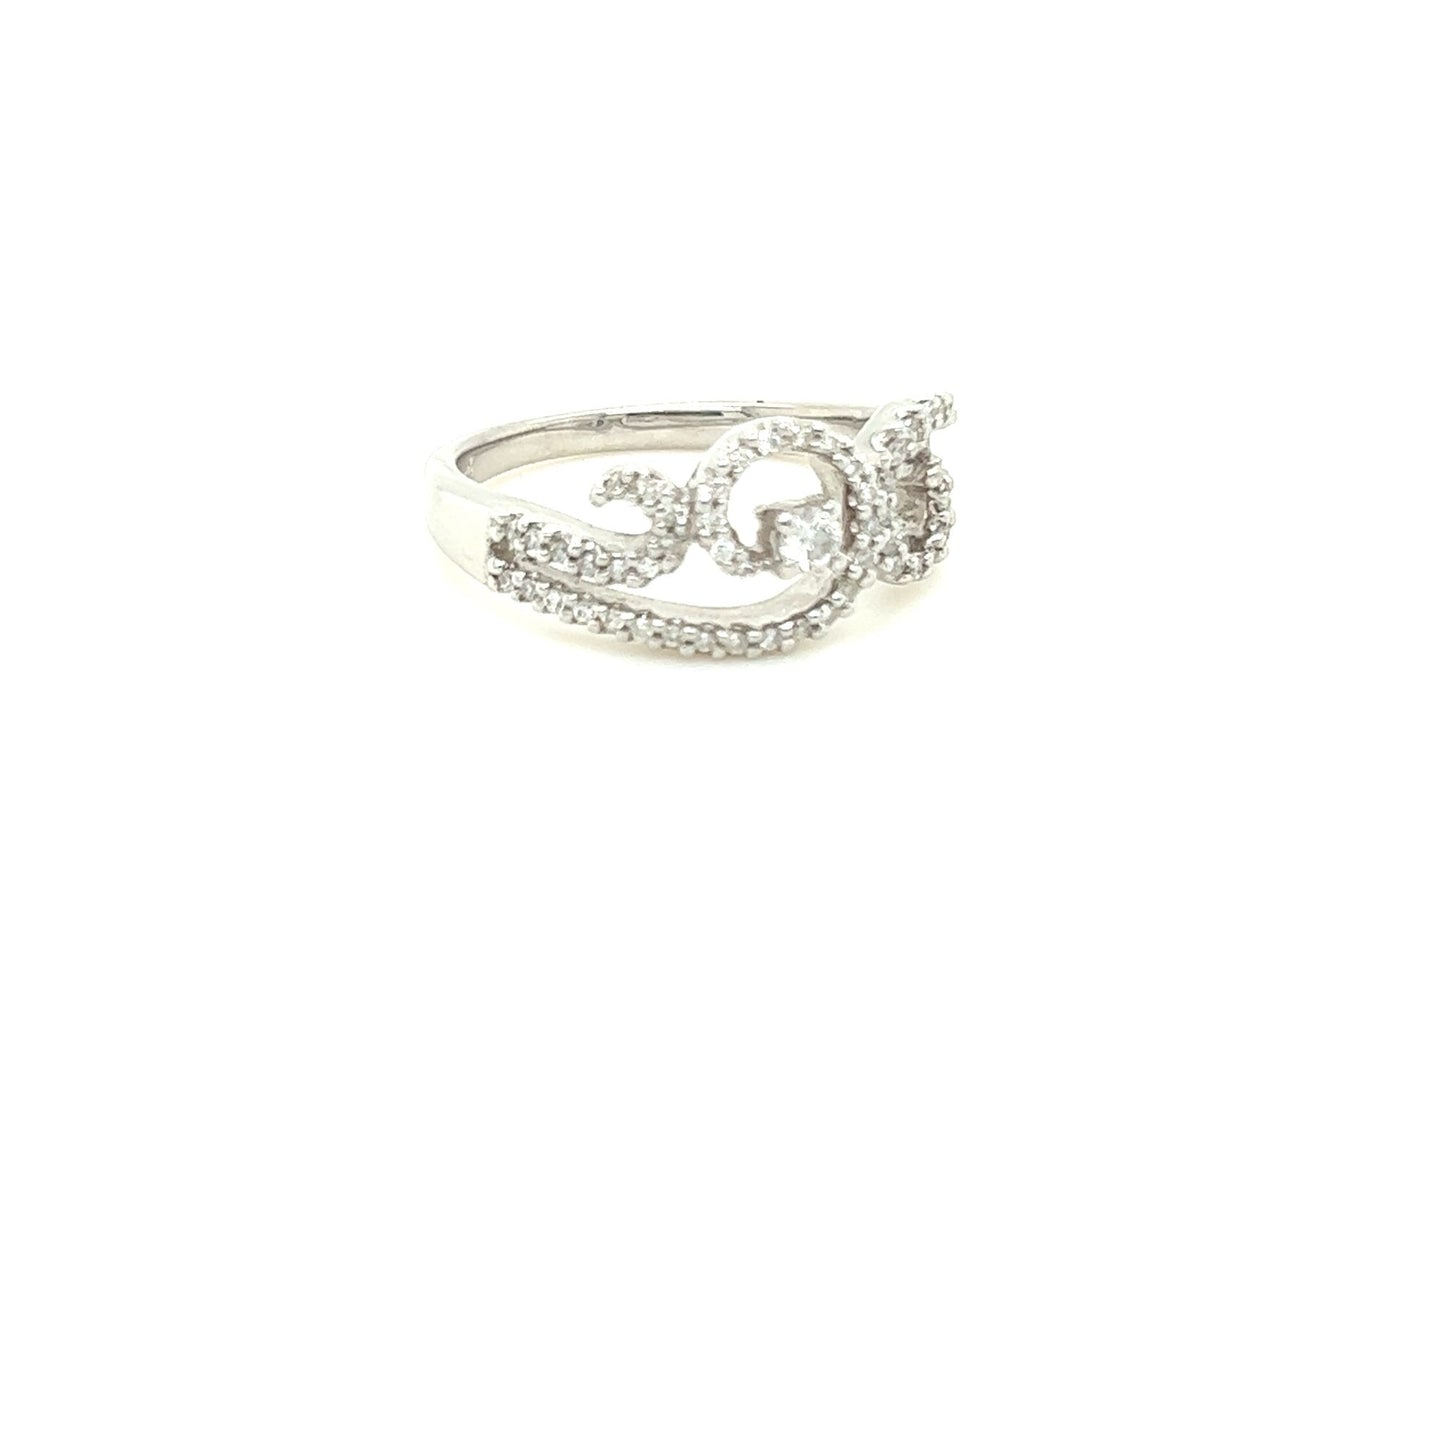 14kt White Gold Swirl Designed Diamond Accented Ring